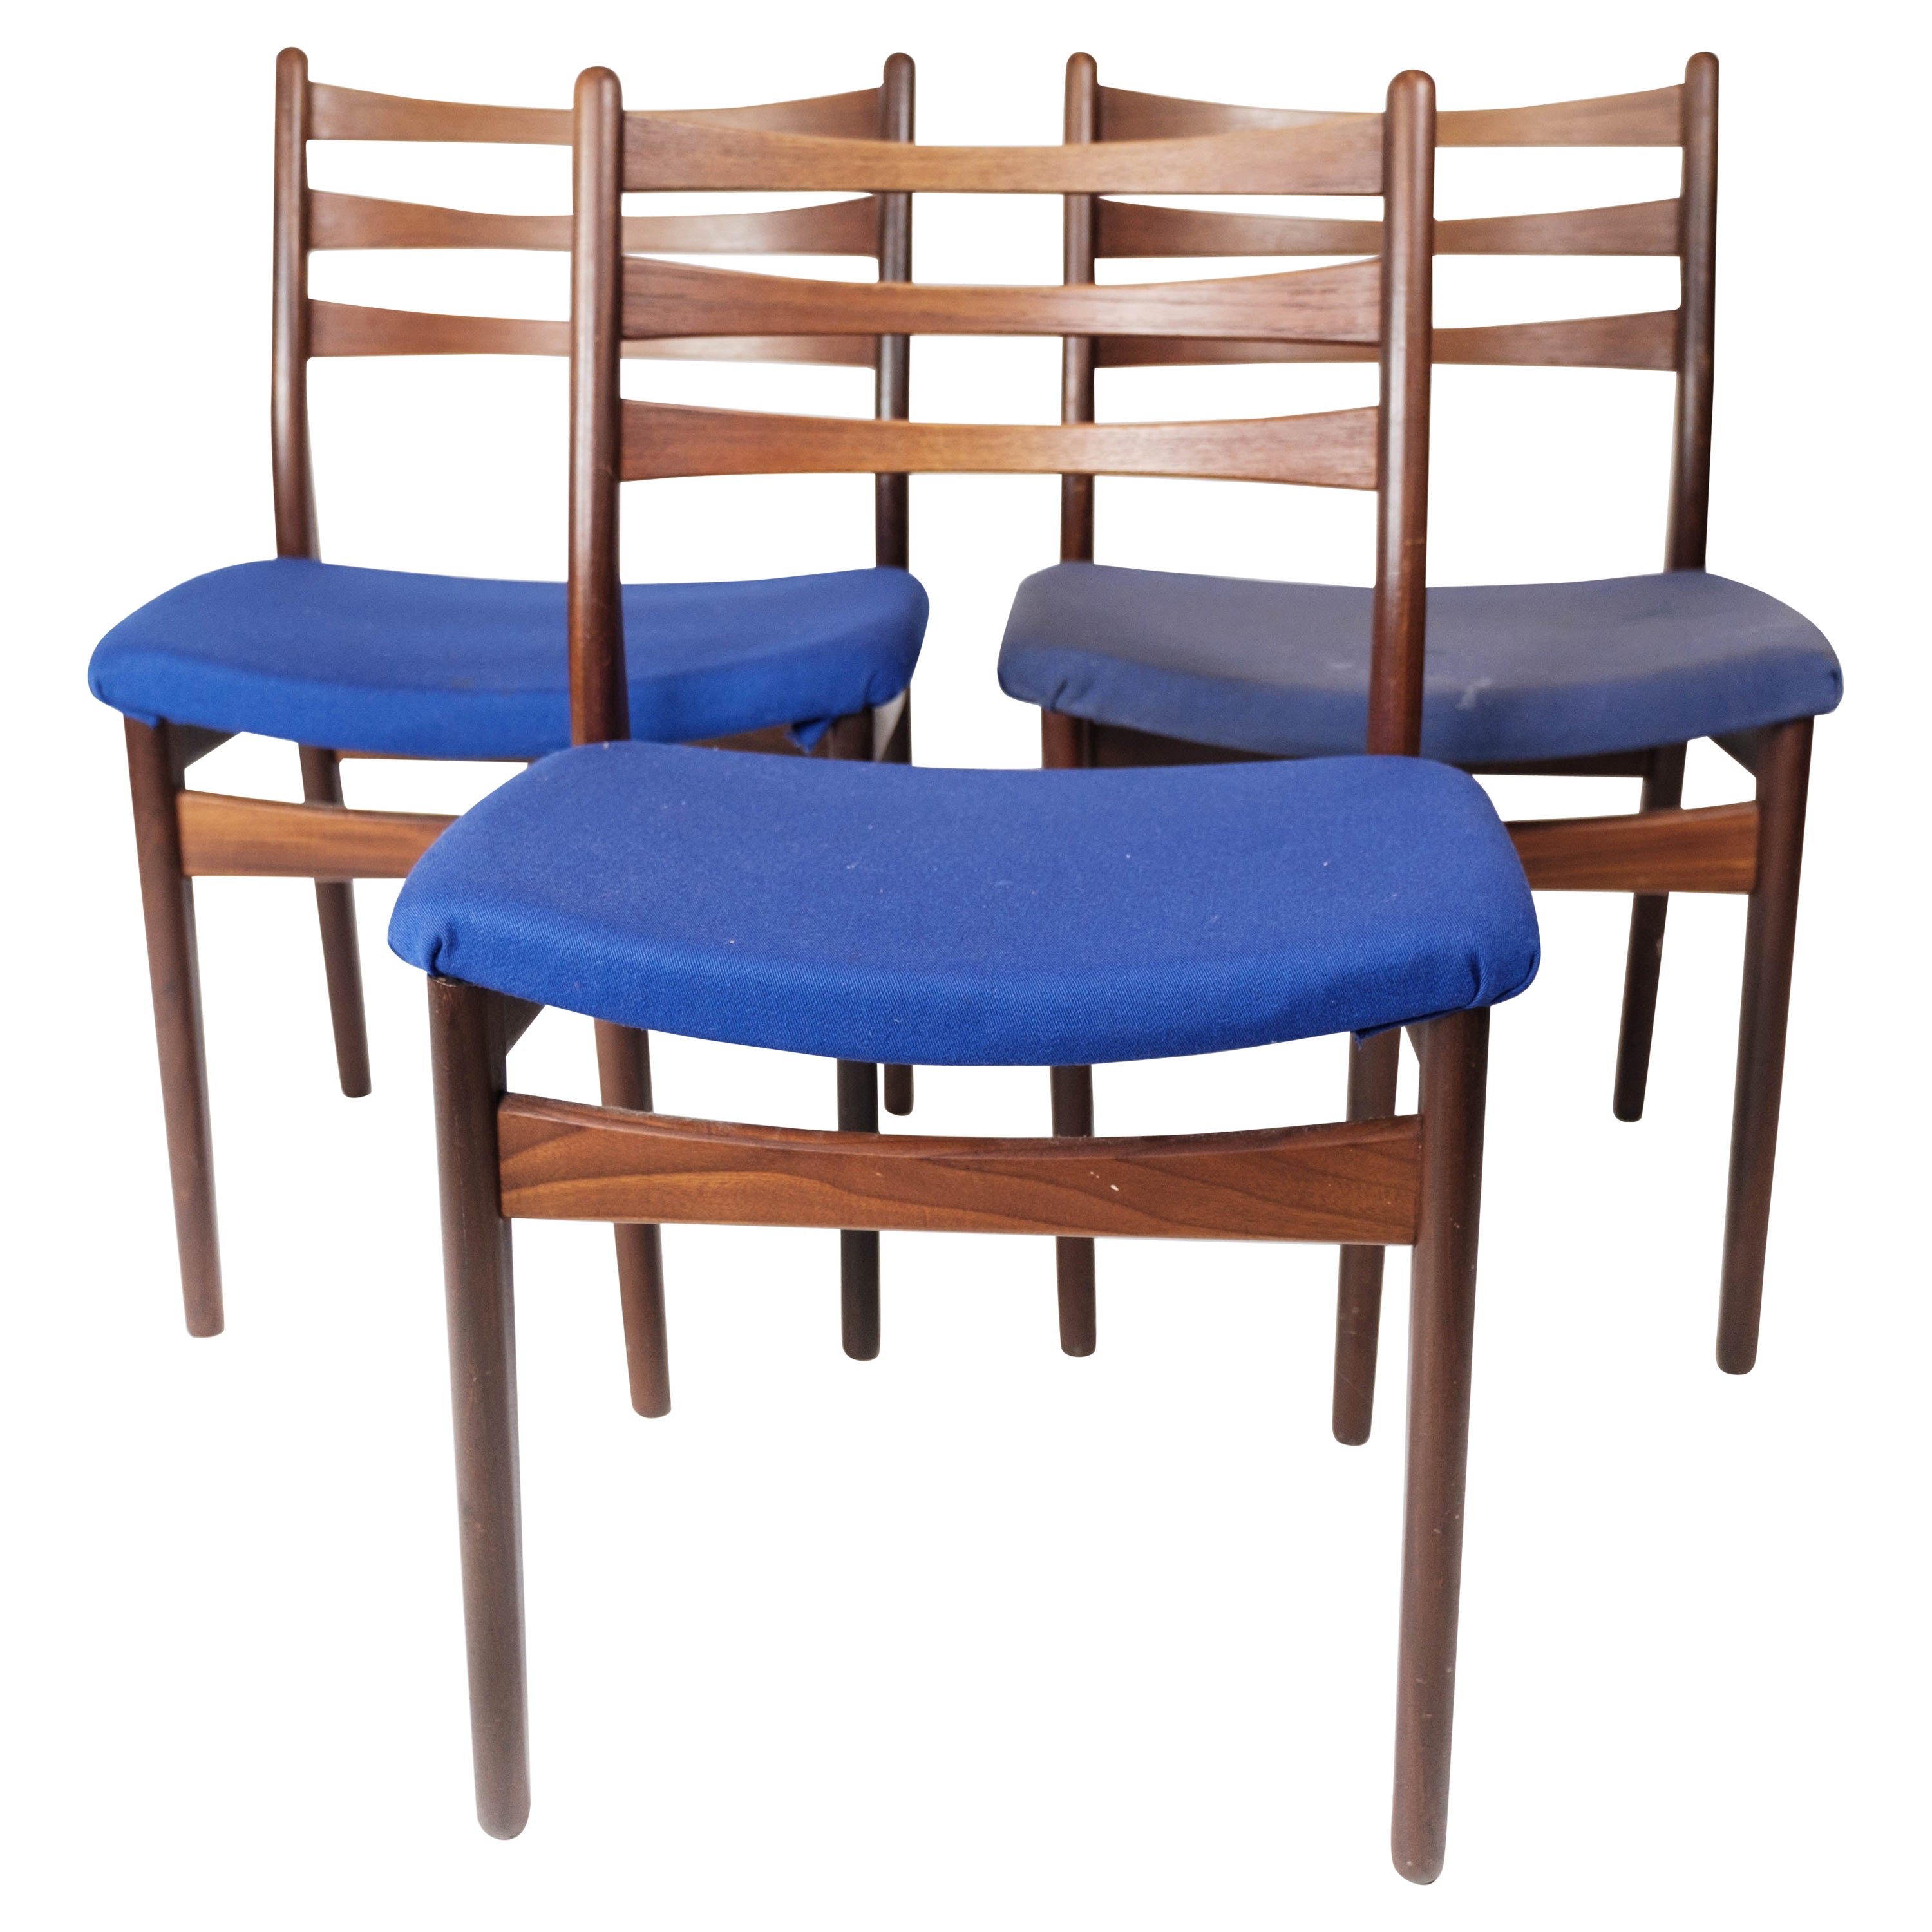 Set of Three Dining Room Chairs in Teak of Danish Design, 1960s